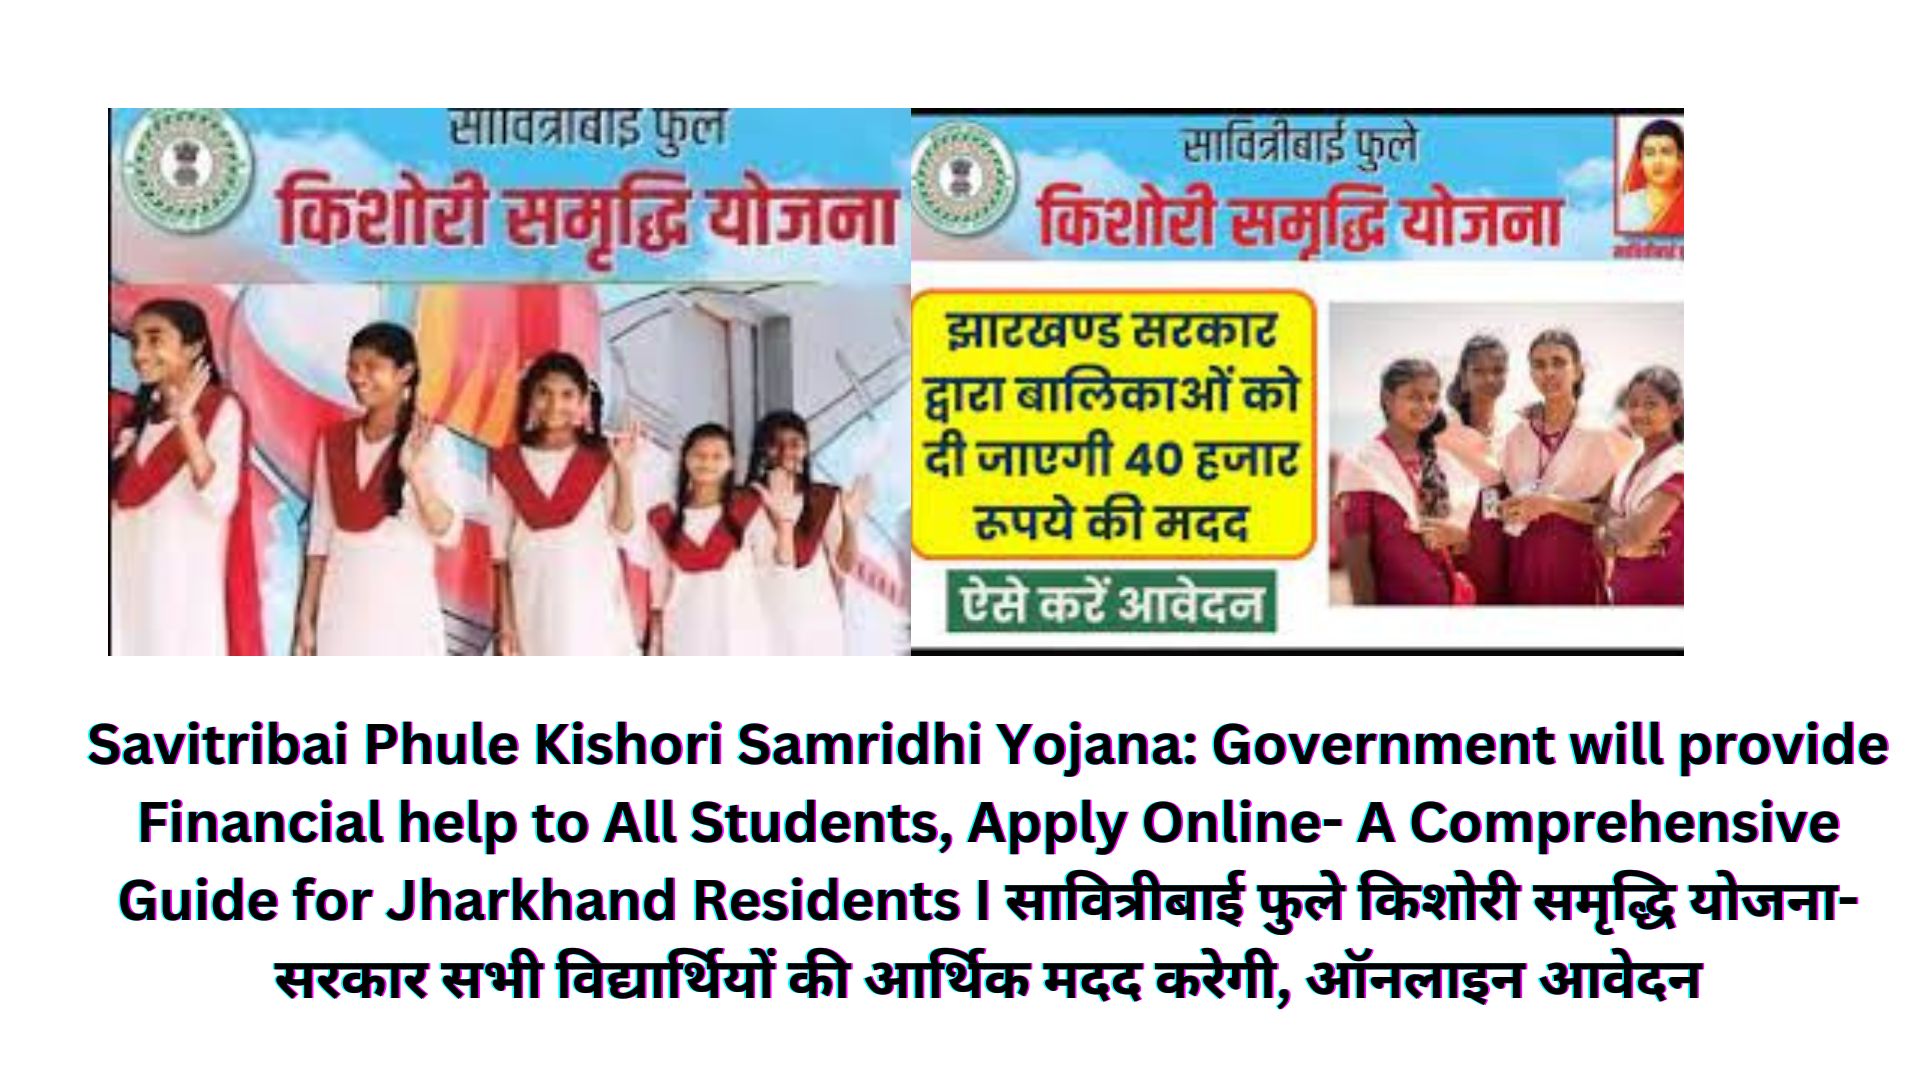 Savitribai Phule Kishori Samridhi Yojana: Government will provide Financial help to All Students, Apply Online- A Comprehensive Guide for Jharkhand Residents I सावित्रीबाई फुले किशोरी समृद्धि योजना- सरकार सभी विद्यार्थियों की आर्थिक मदद करेगी, ऑनलाइन आवेदन